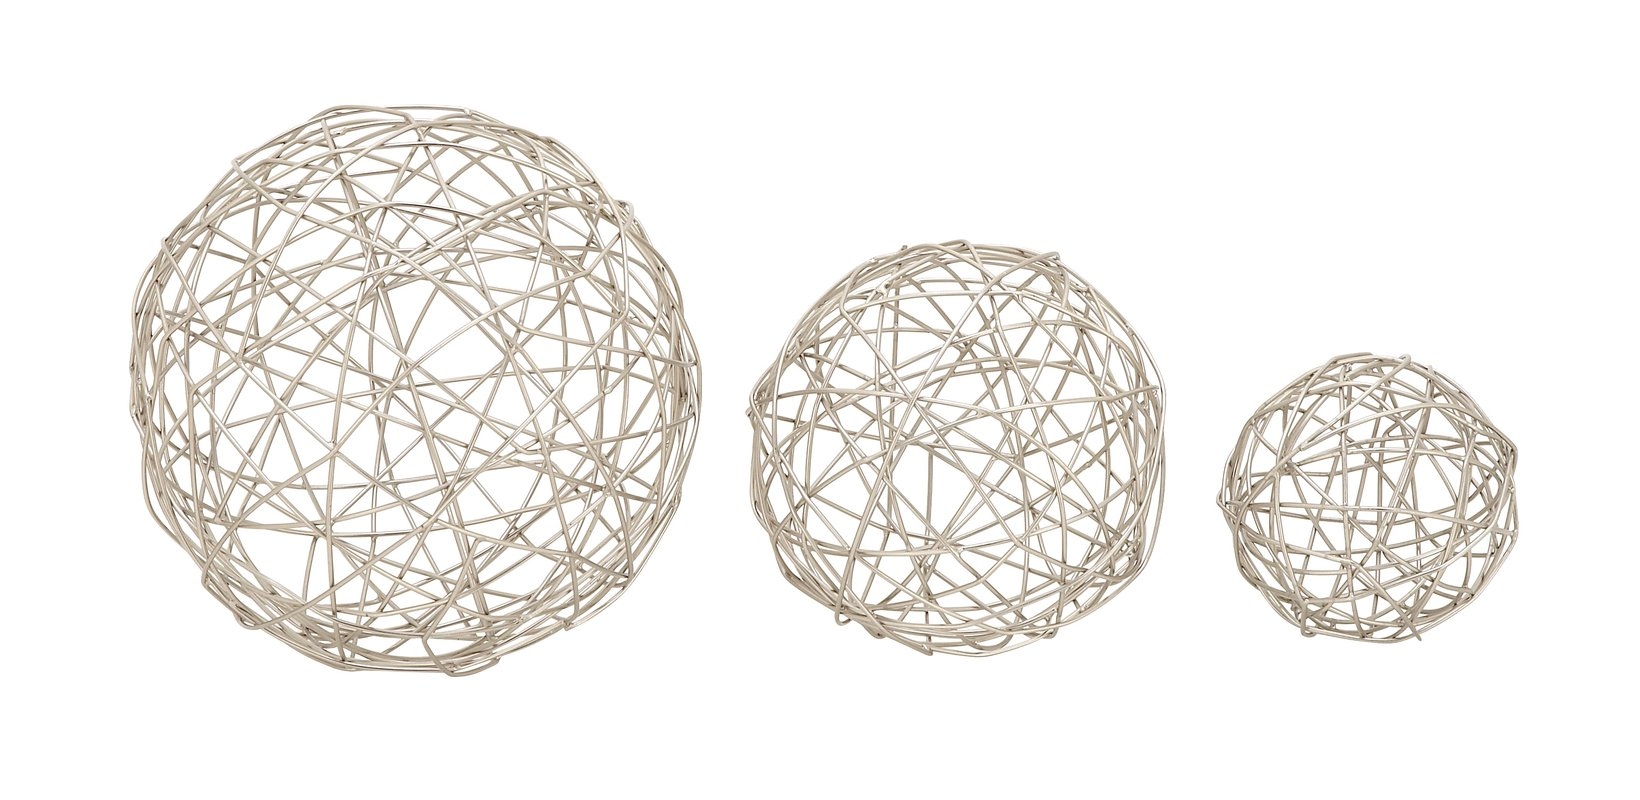 Metal Sphere 3 Piece Sculpture Set - Image 1